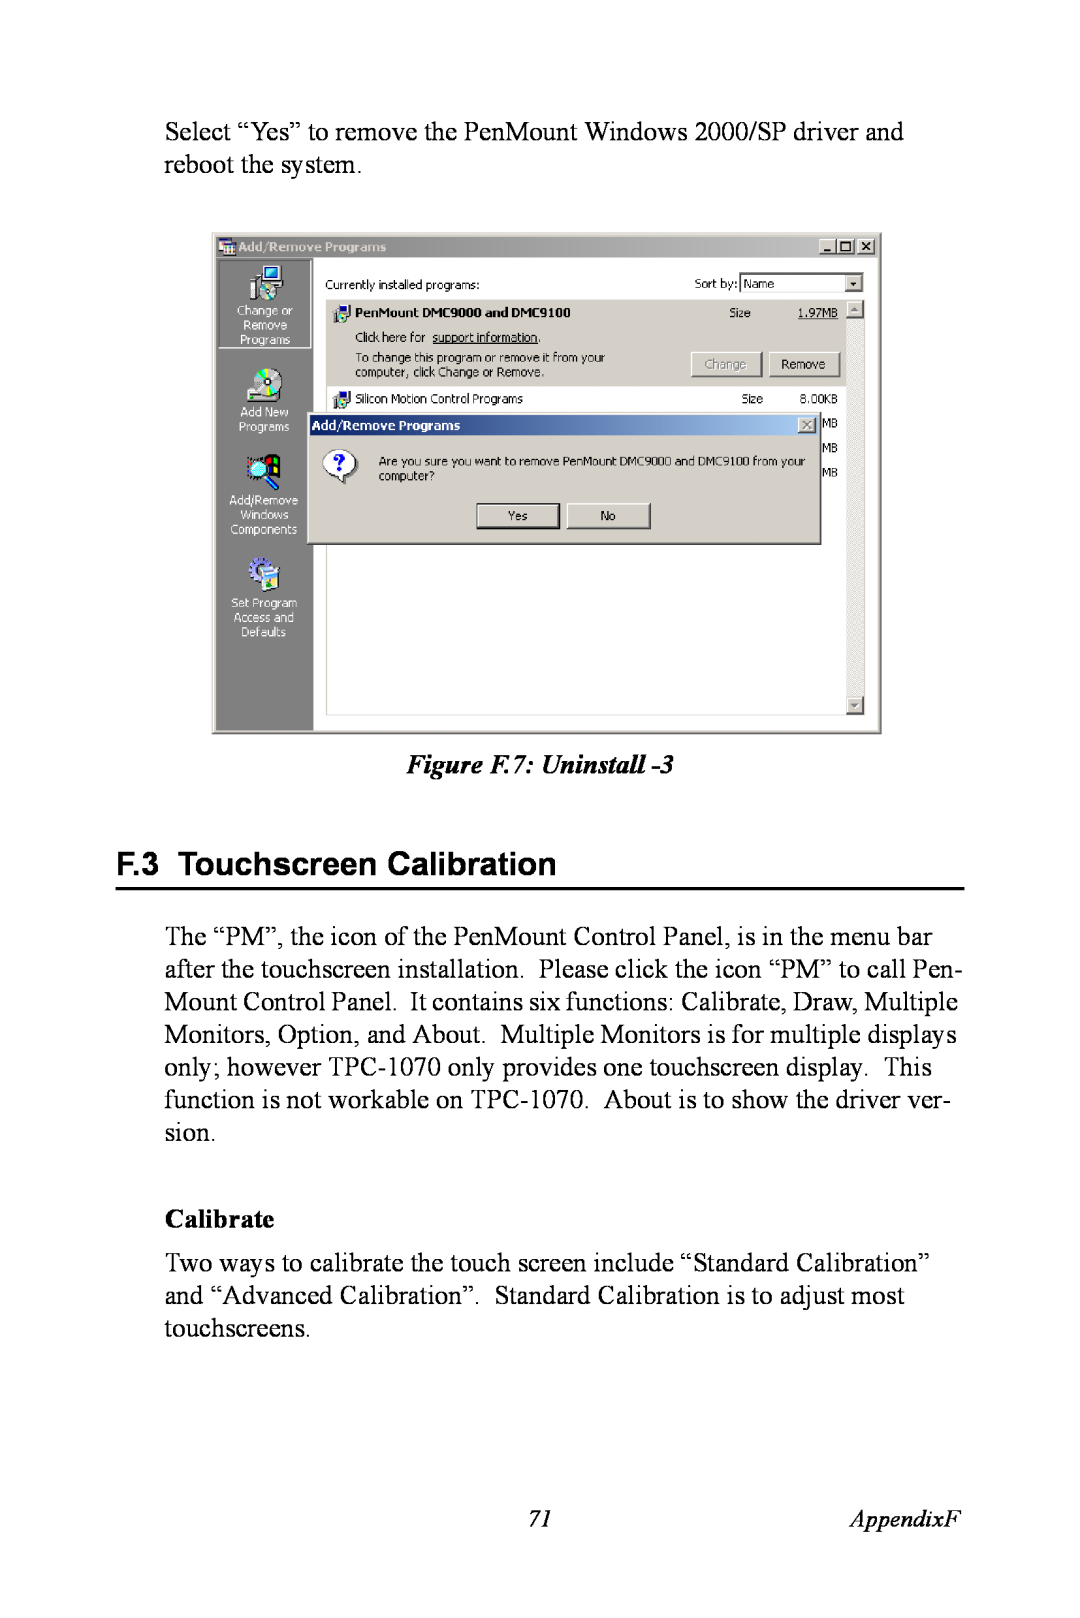 Intel TPC-1070 user manual F.3 Touchscreen Calibration, Figure F.7 Uninstall, Calibrate 